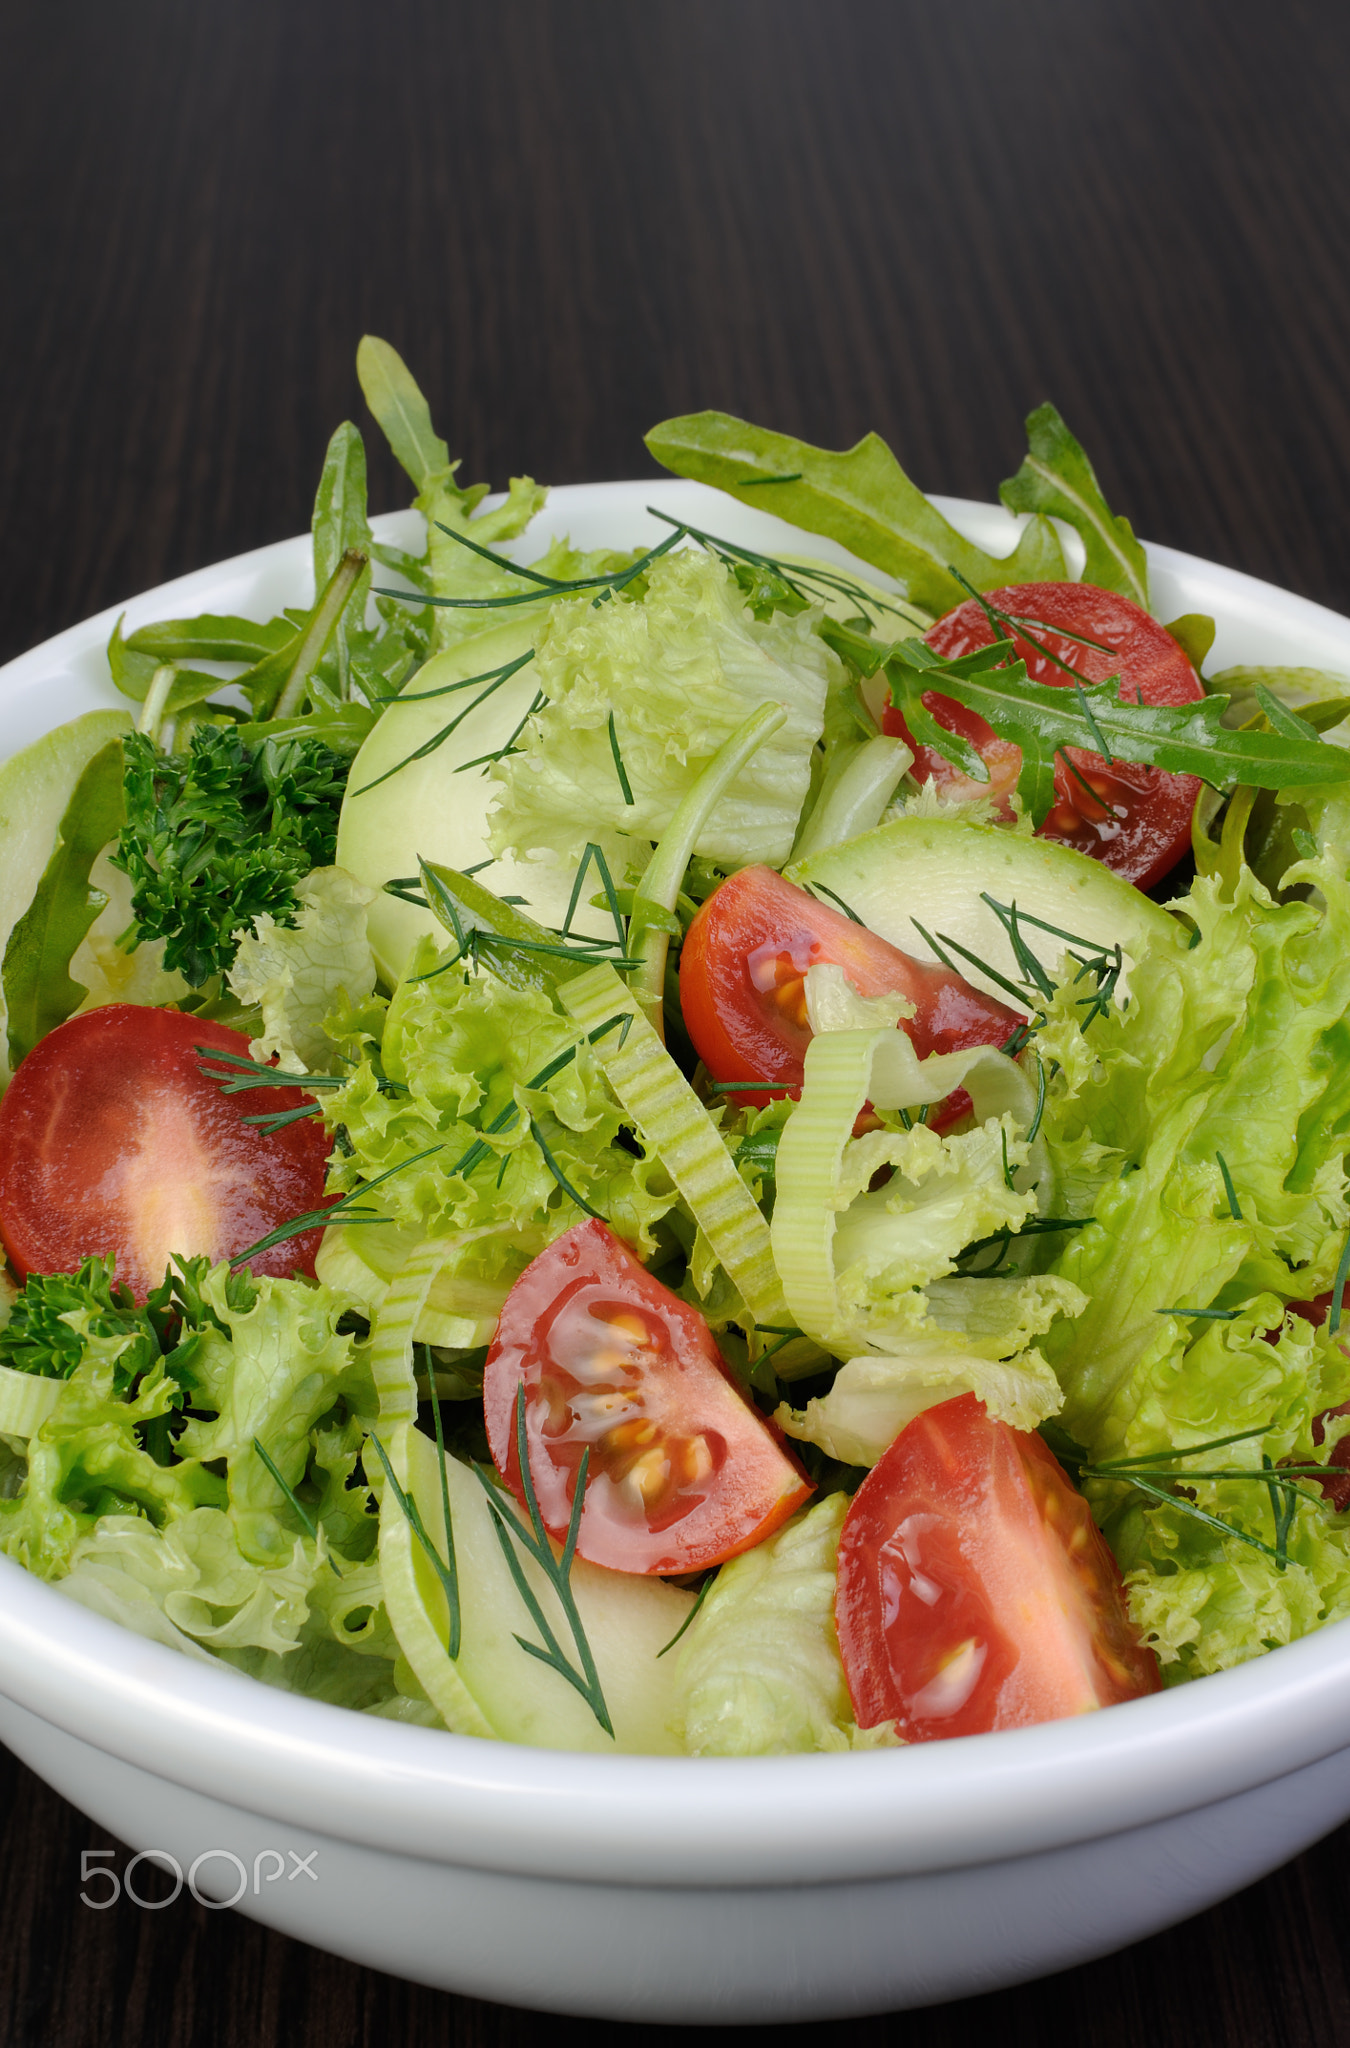 Light summer vegetable salad